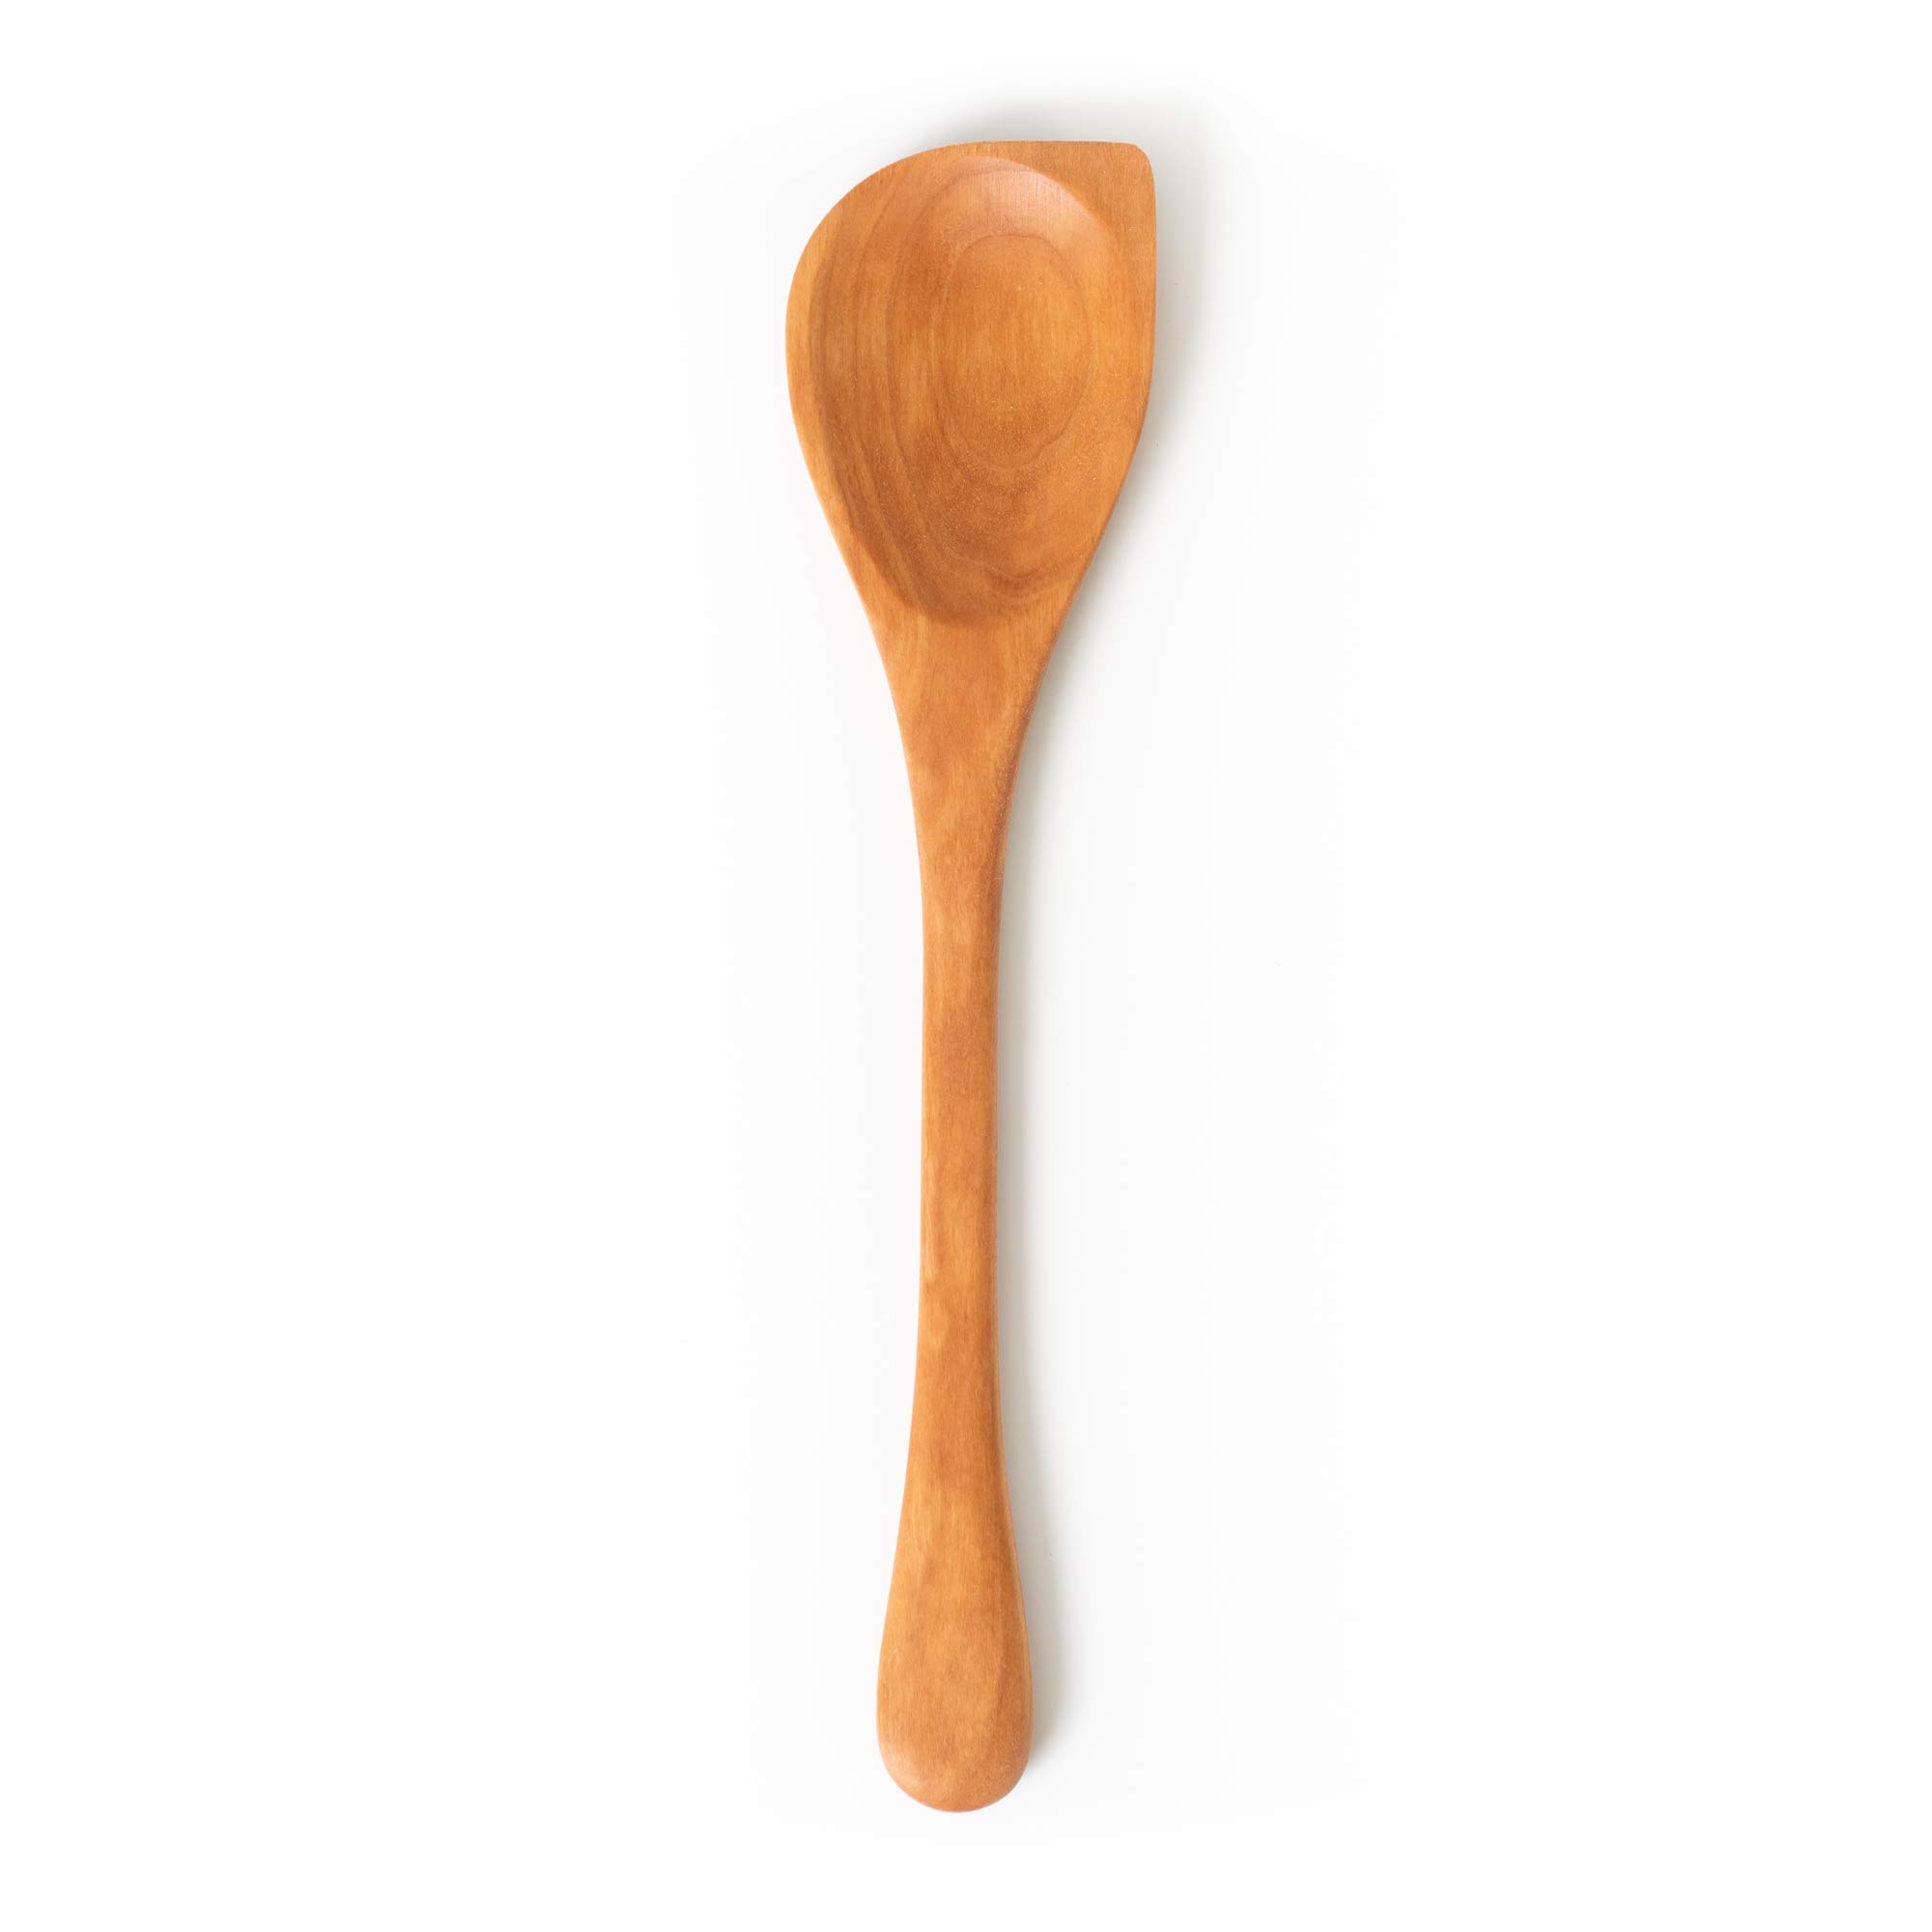 Lancaster Cast Iron Wooden Corner Spoon, 12” Handmade Lancaster Wood Spoons - Sauté, Baking, Mixing, and Serving Kitchen Utensils